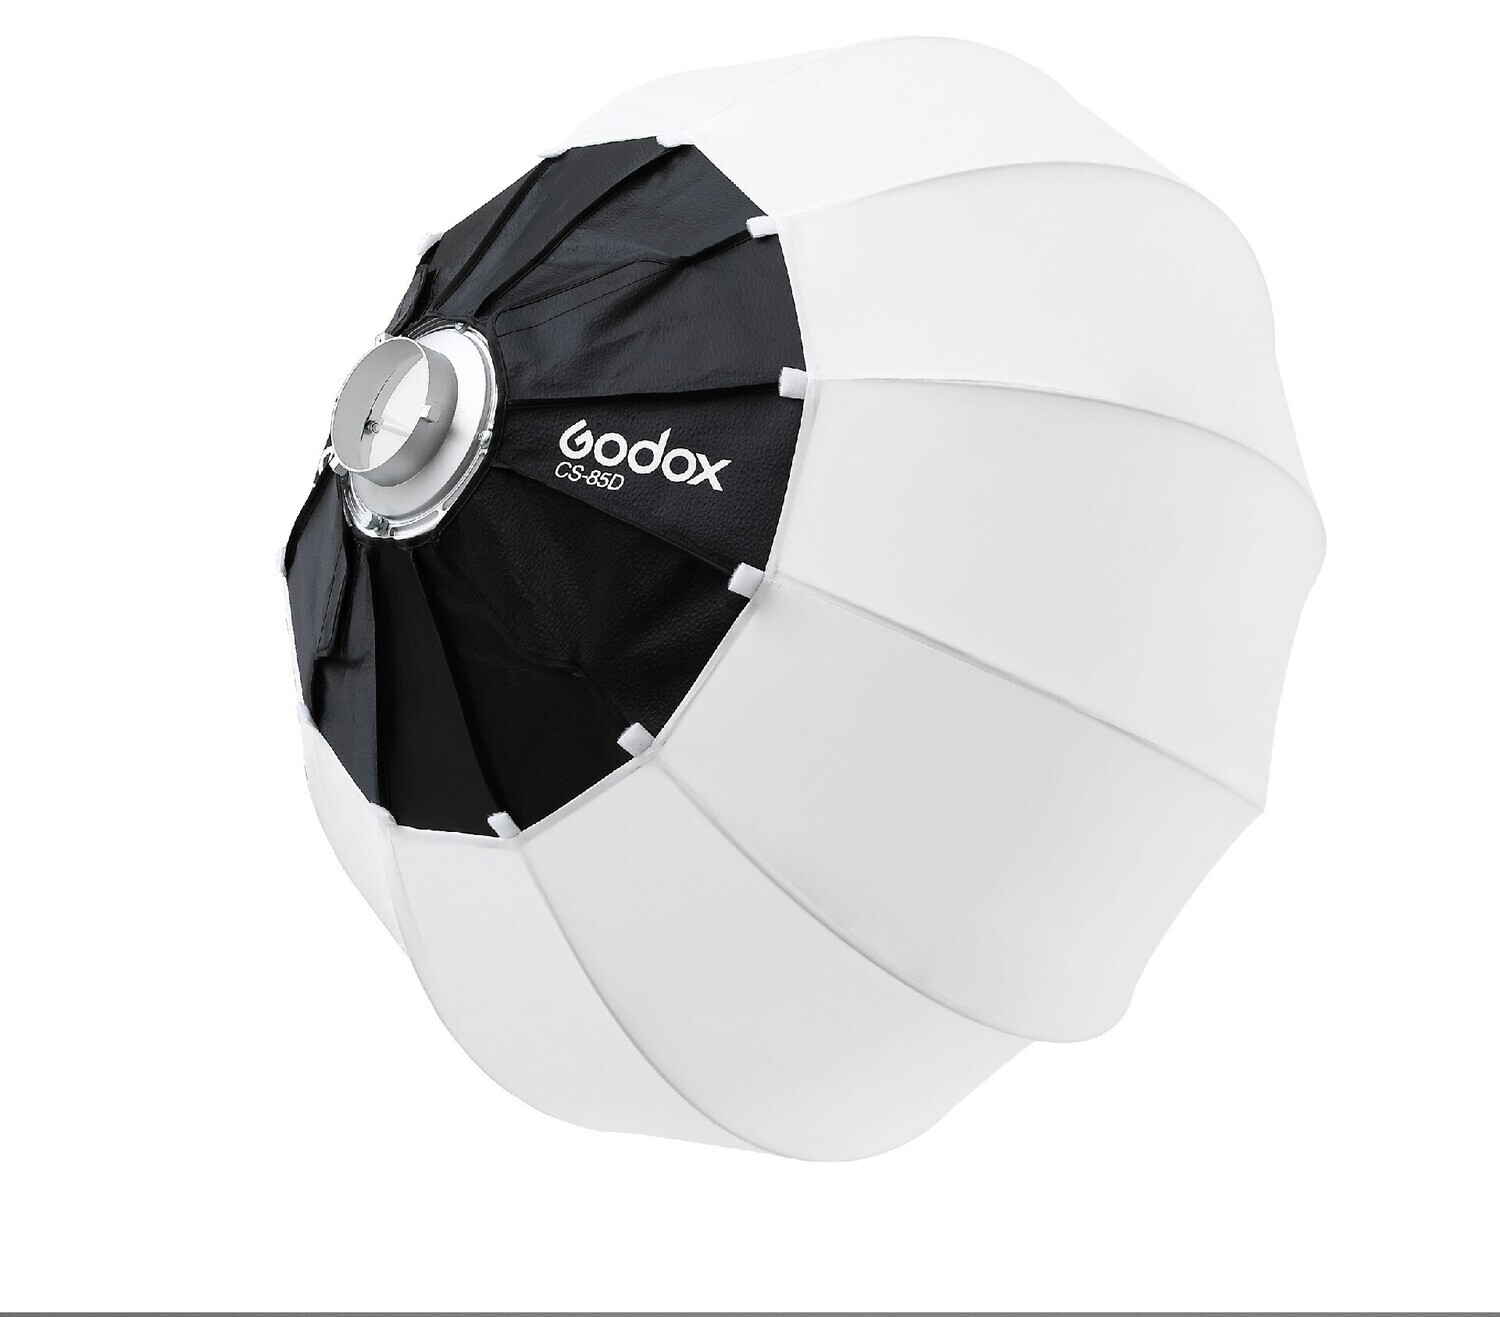 Lantern softbox Godox CS-65D